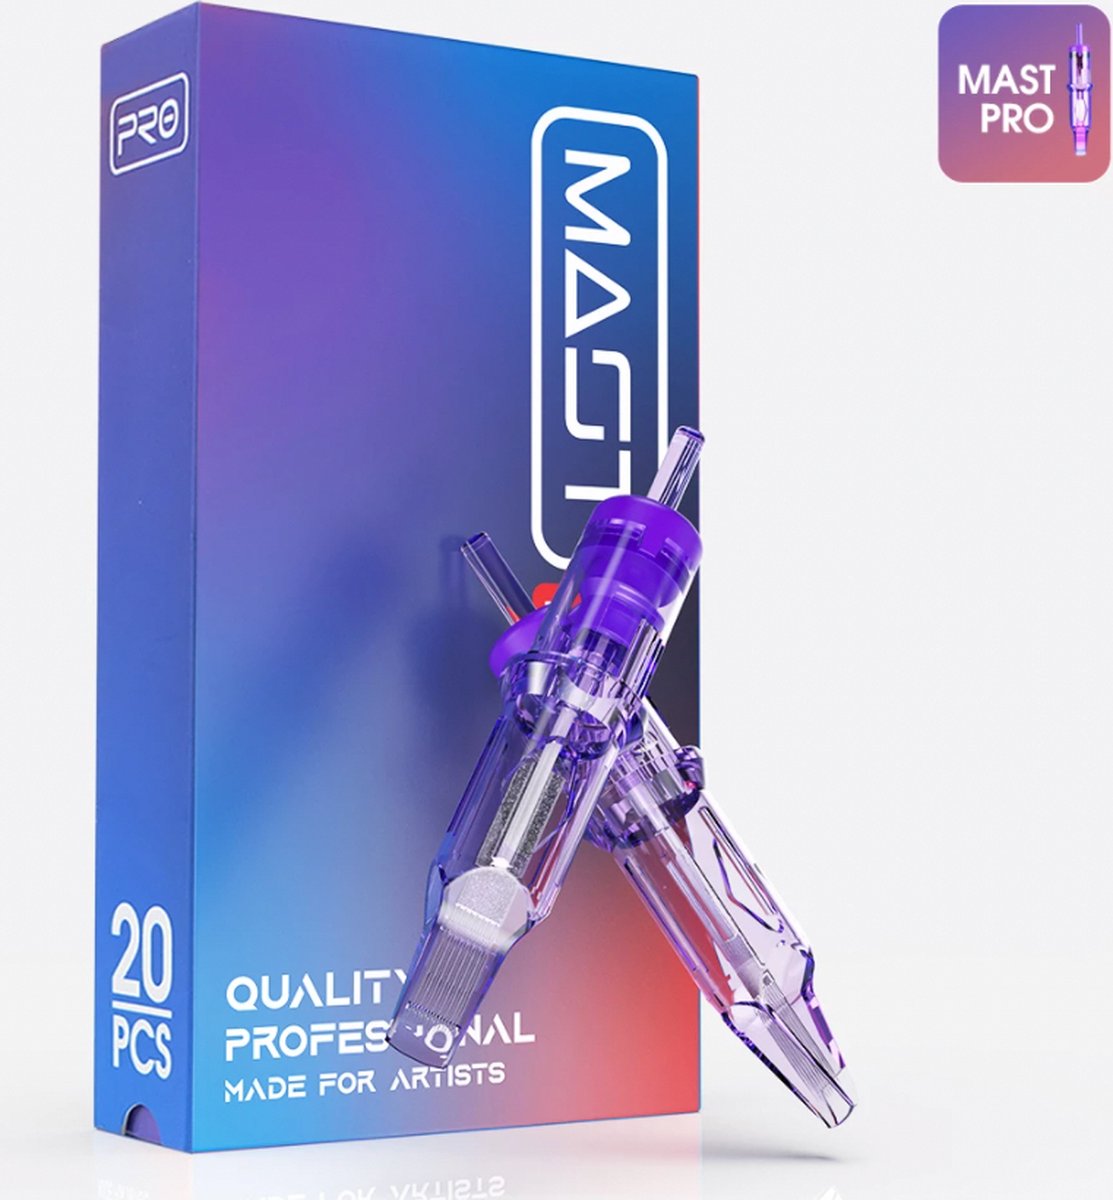 Mast Pro needle -1 RL 0.30 (powderbrows) - PMU naald - PMU needle - TATTOO needle